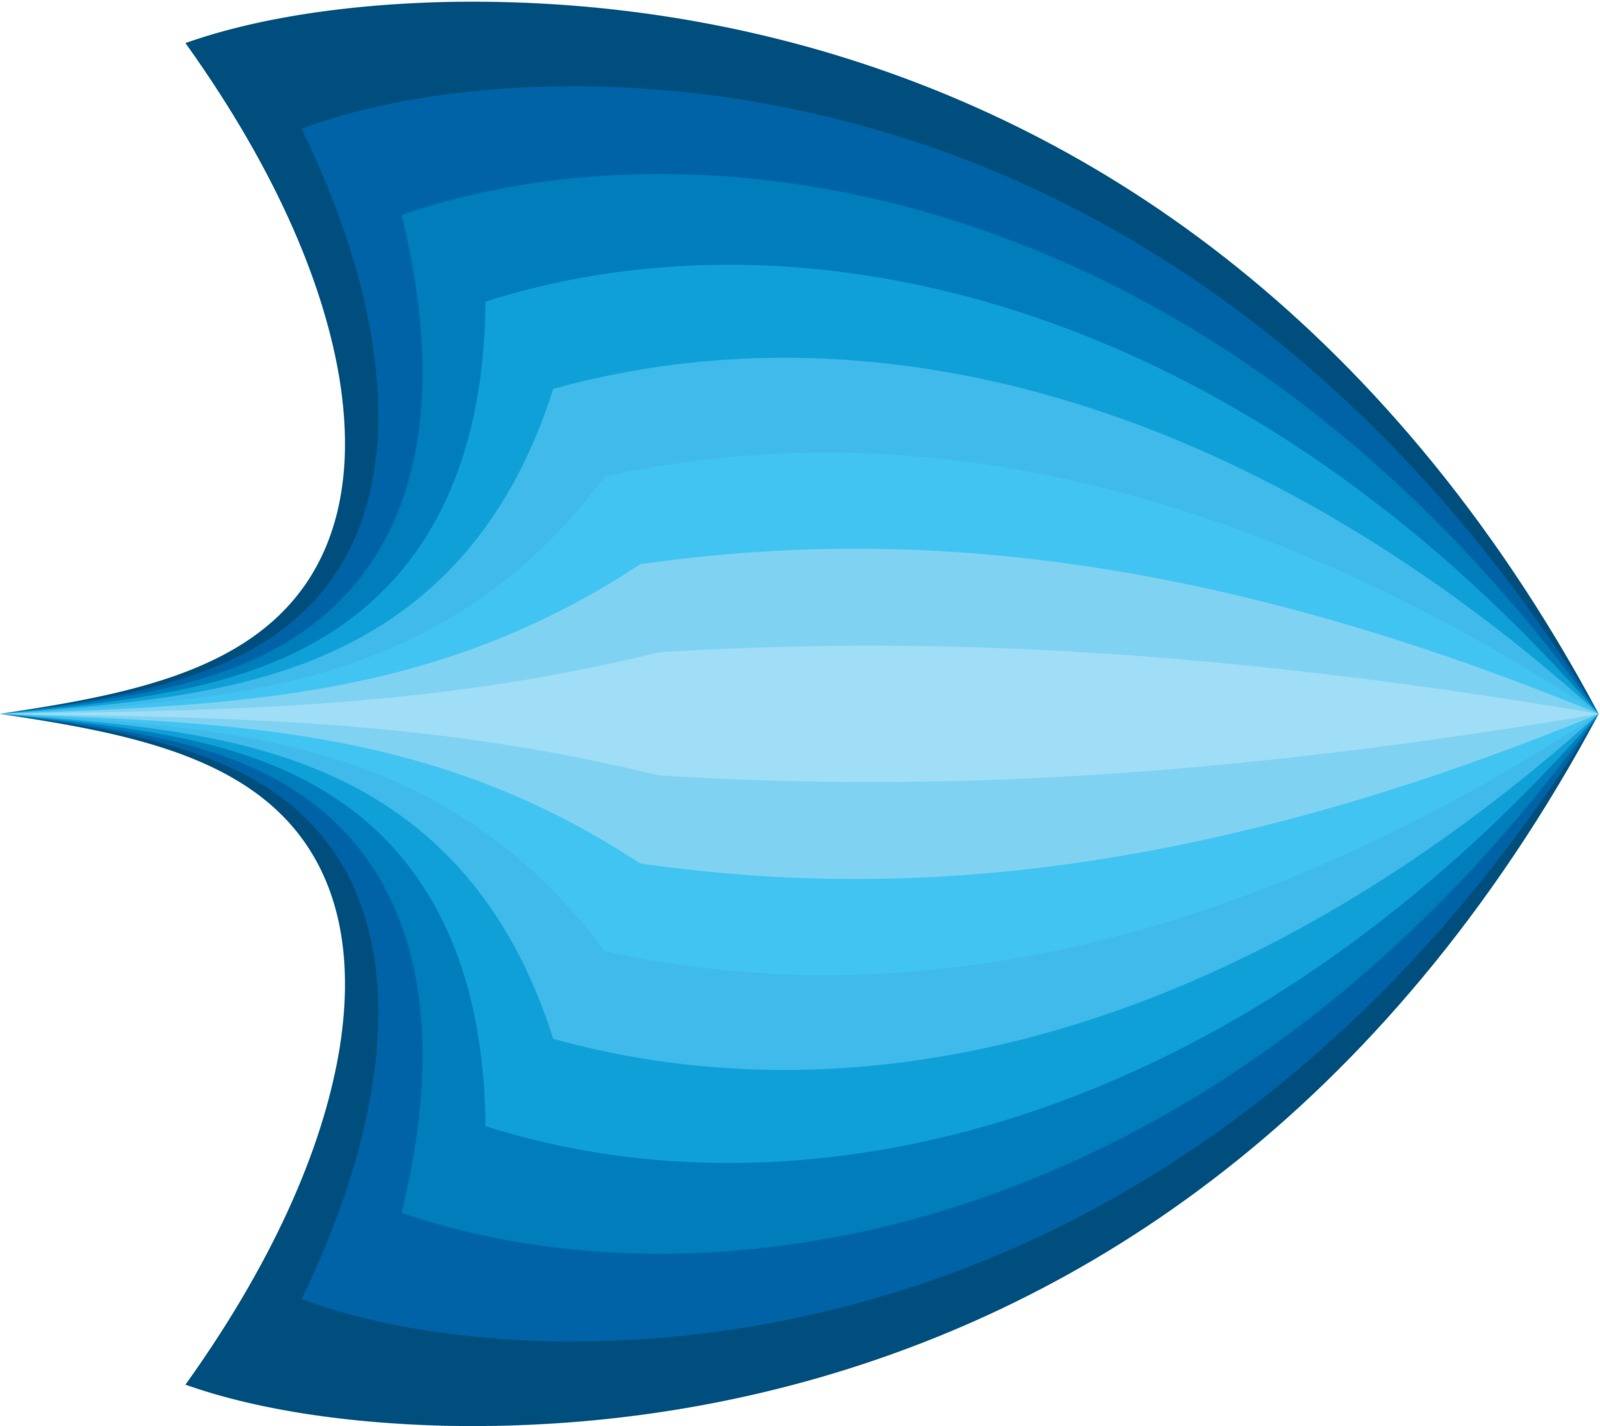 This image is a vector file representing a abstract aqua fish logo.